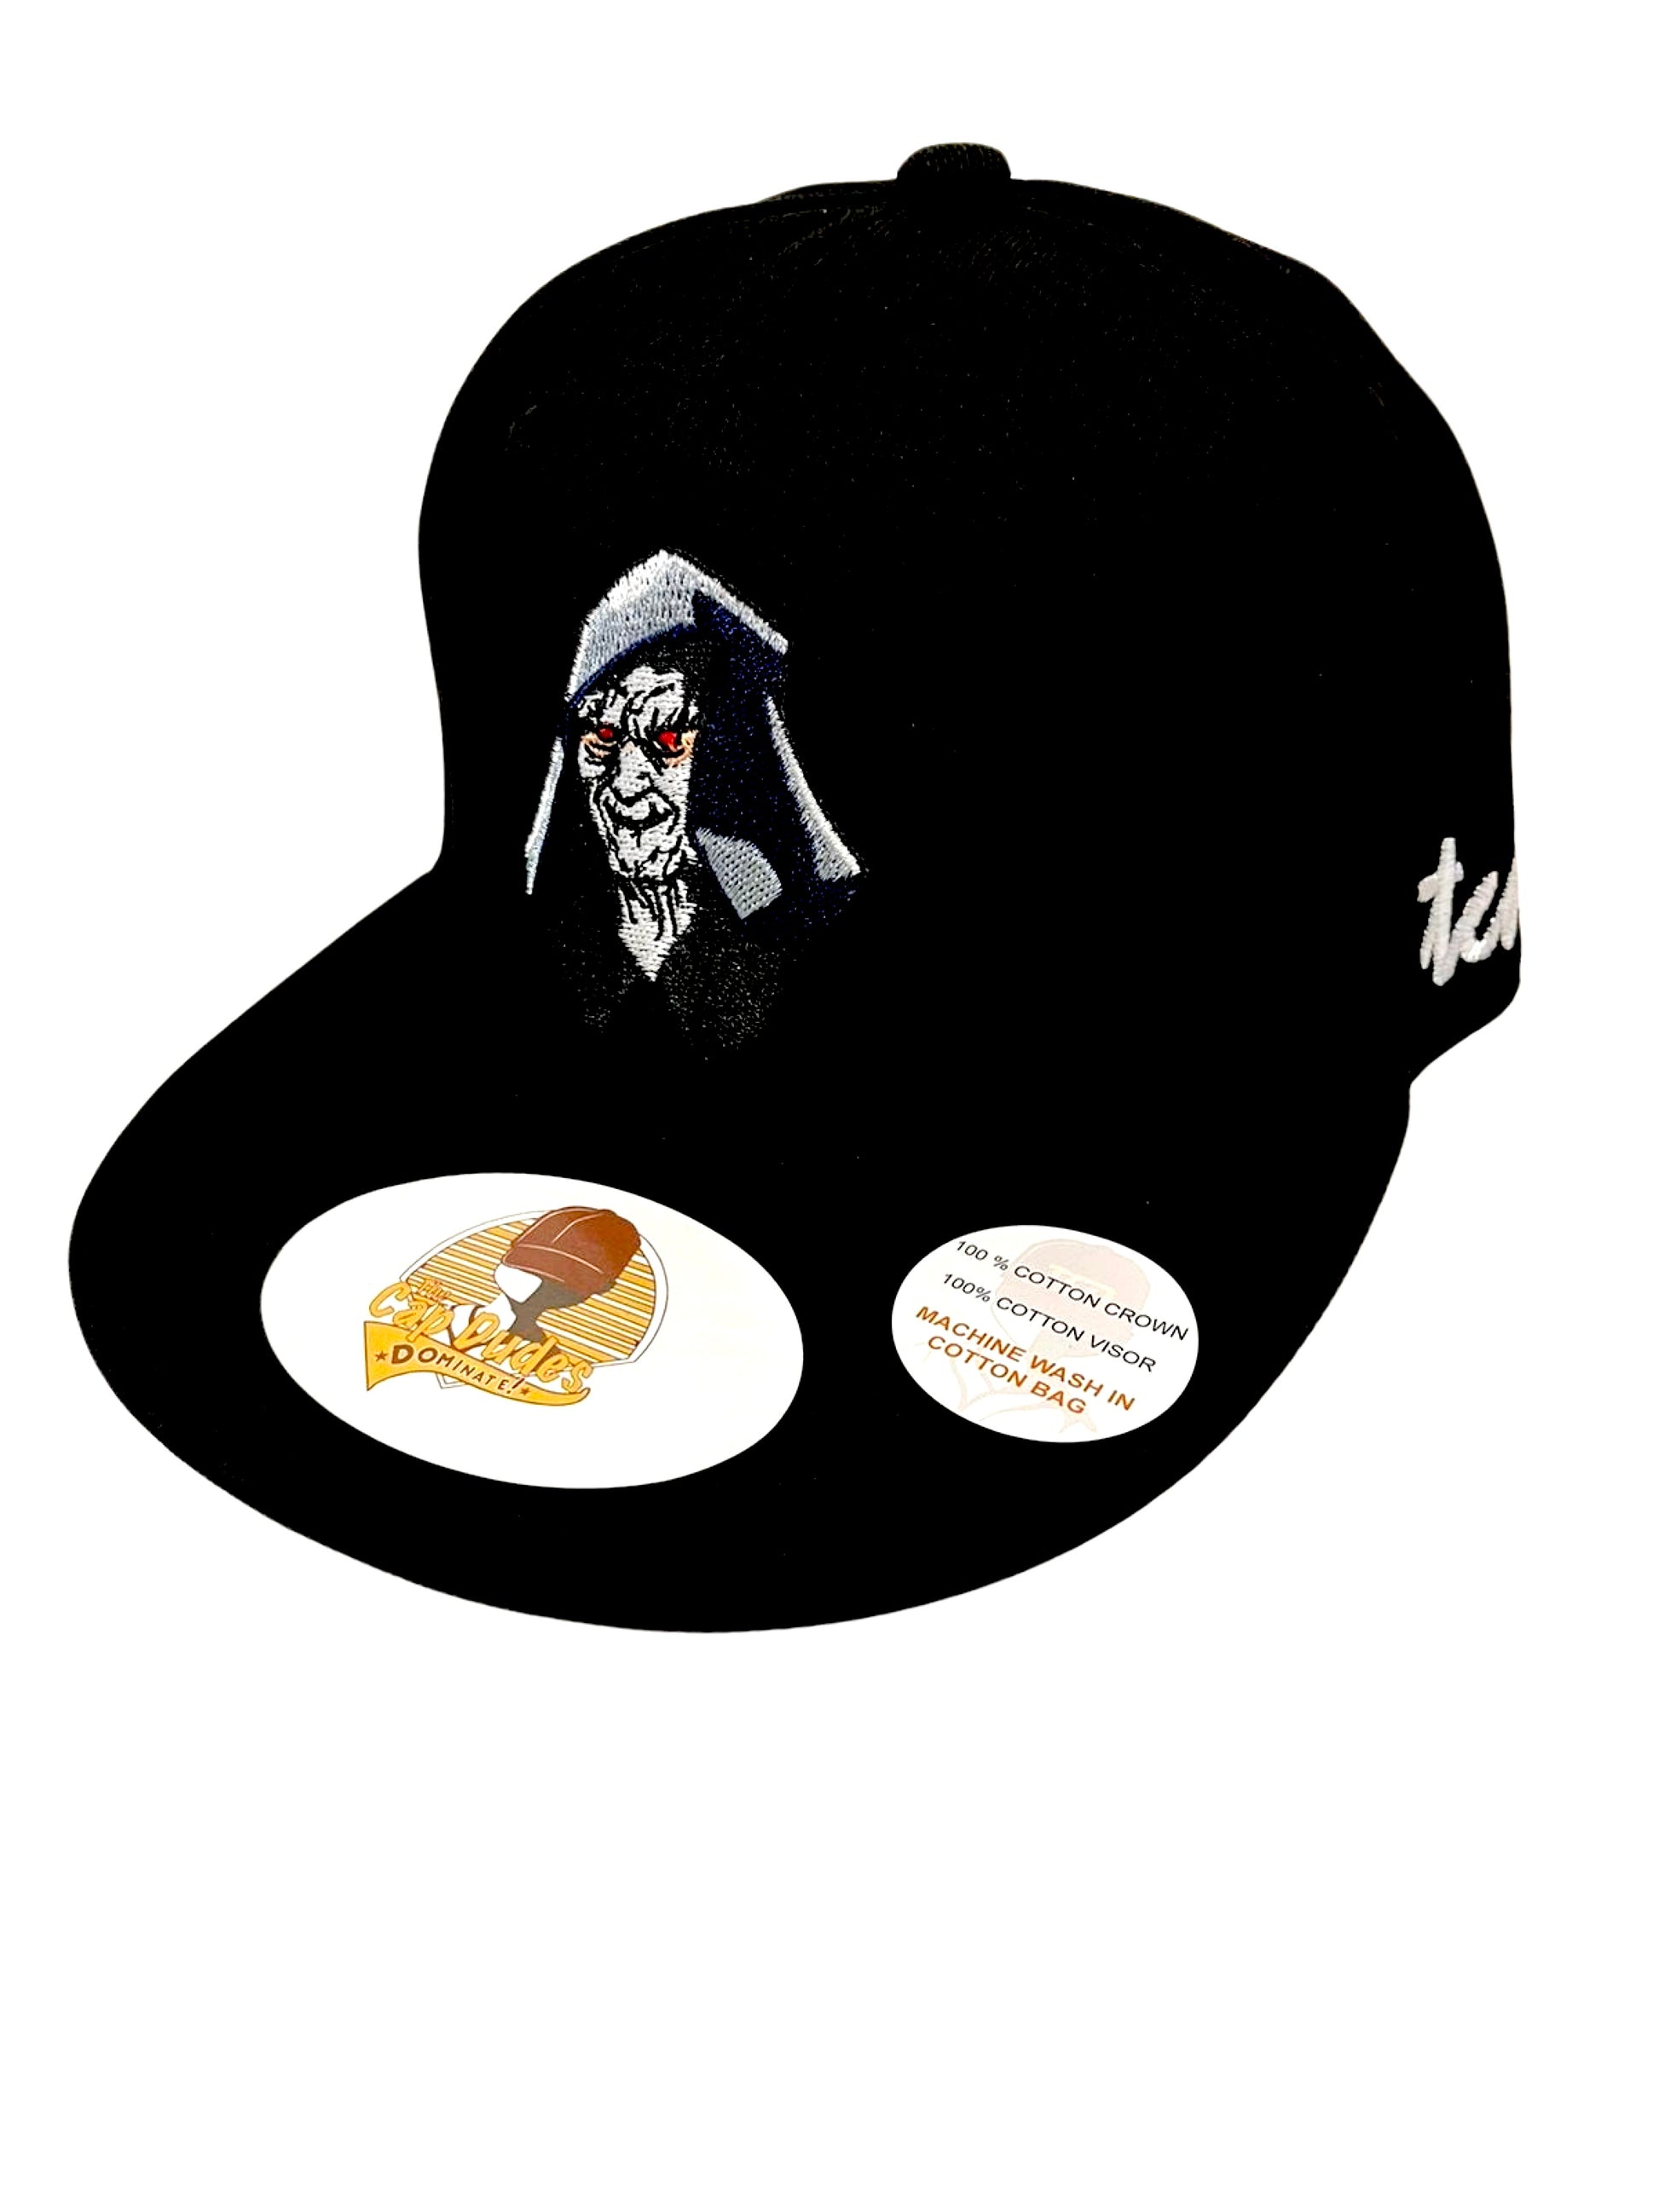 Star Wars Darth Sidious Baseball Cap - The Cap Dudes